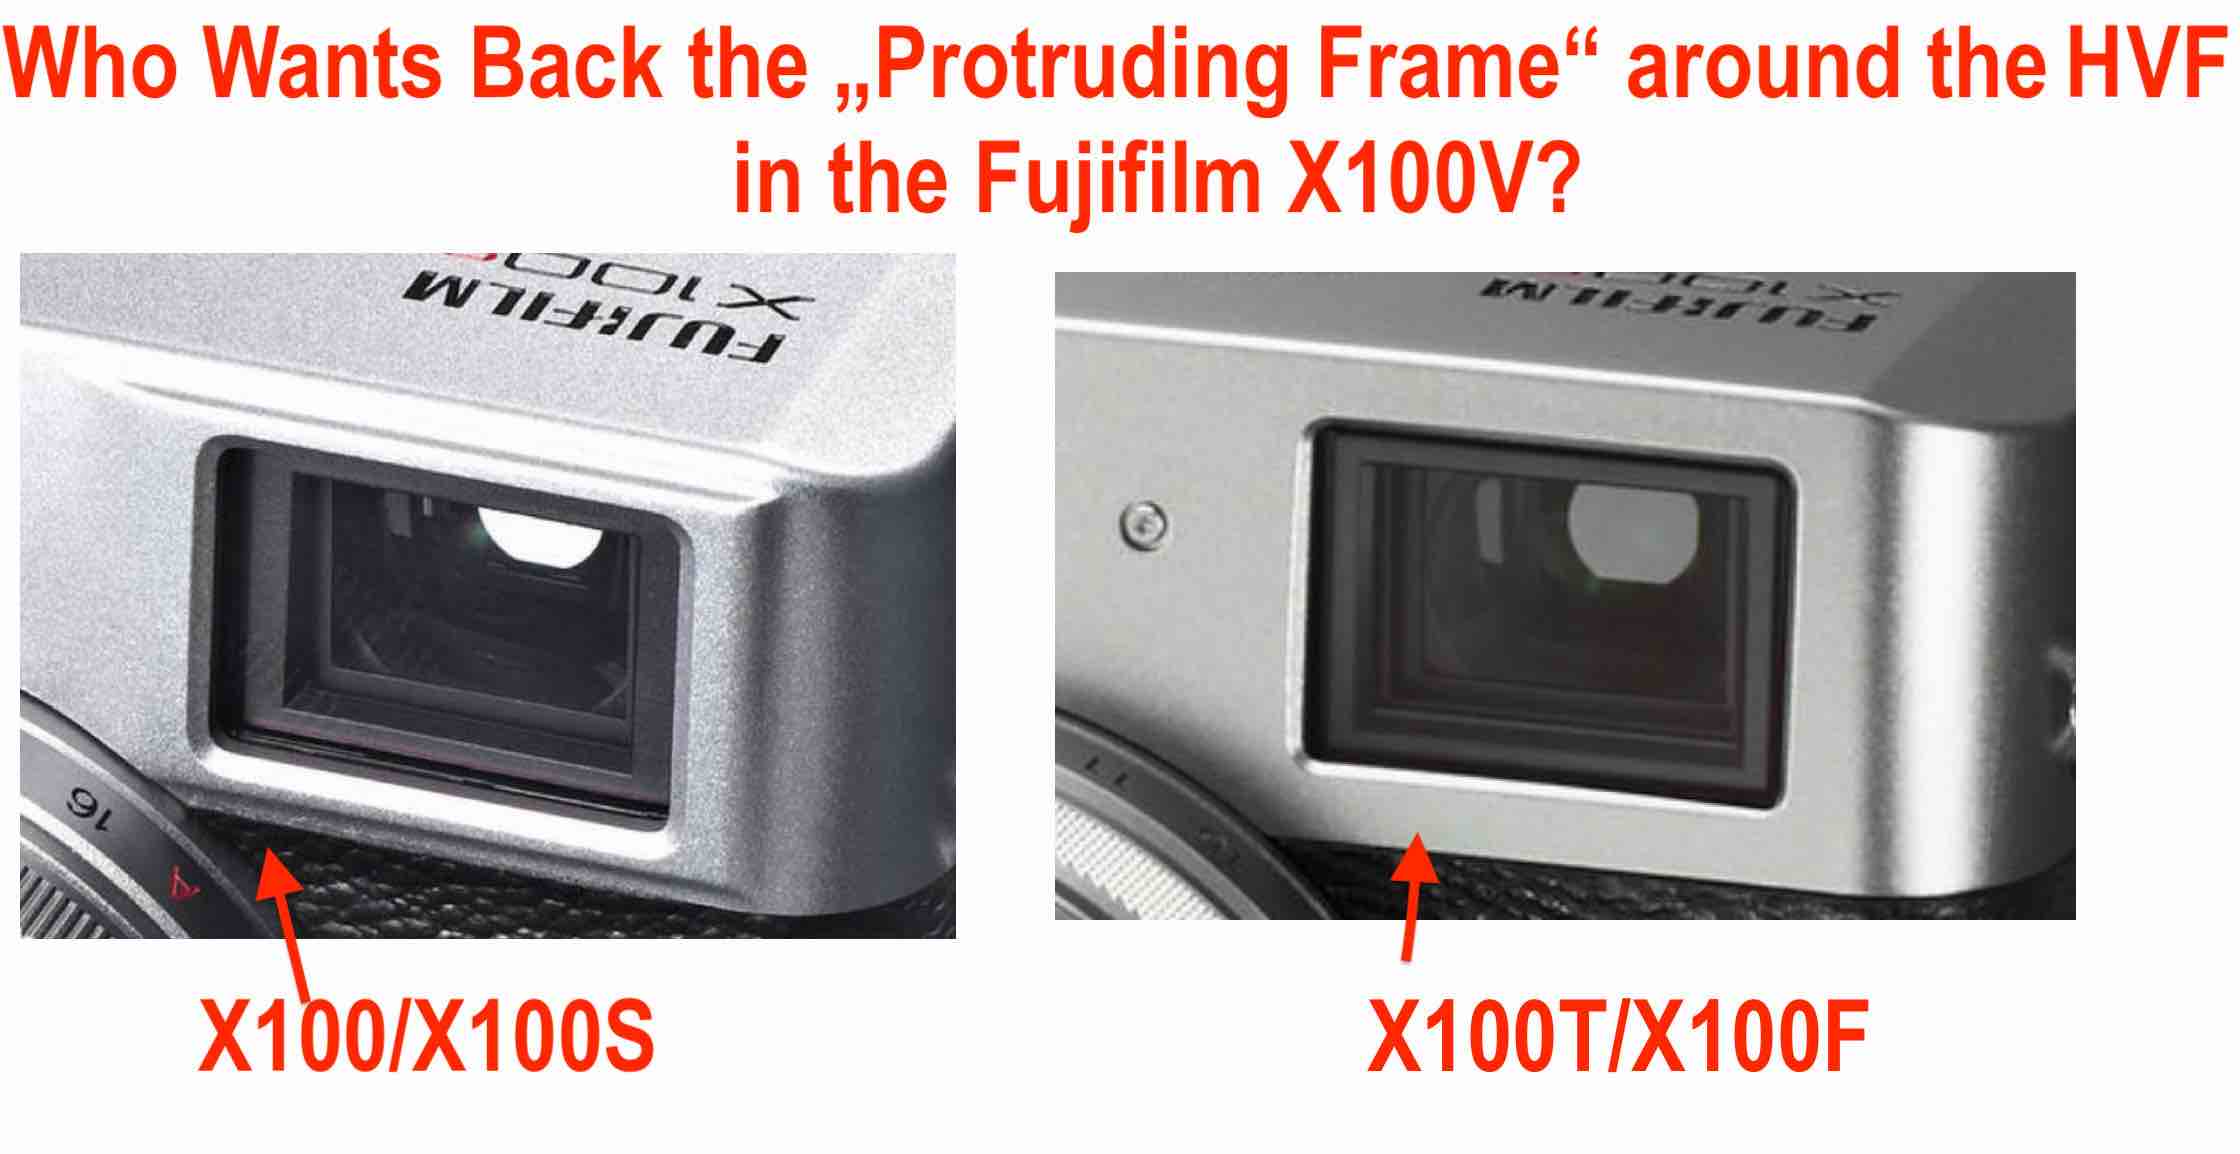 wacht gevaarlijk inval 3½ Reasons Why Fujifilm is Waiting so Long to Release the Fujifilm X100V -  Fuji Rumors